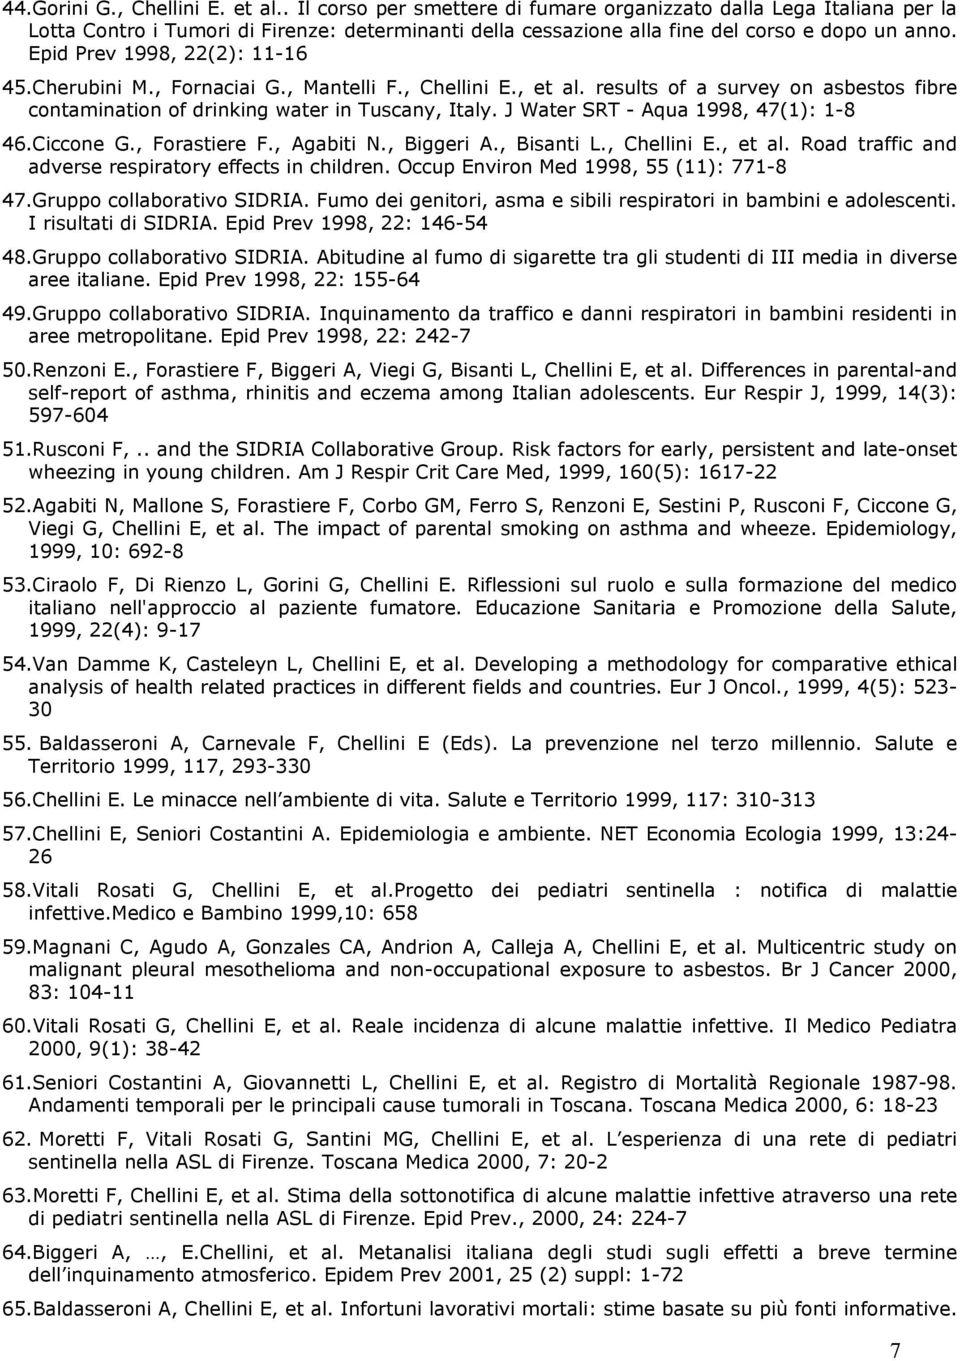 Epid Prev 1998, 22(2): 11-16 45.Cherubini M., Fornaciai G., Mantelli F., Chellini E., et al. results of a survey on asbestos fibre contamination of drinking water in Tuscany, Italy.